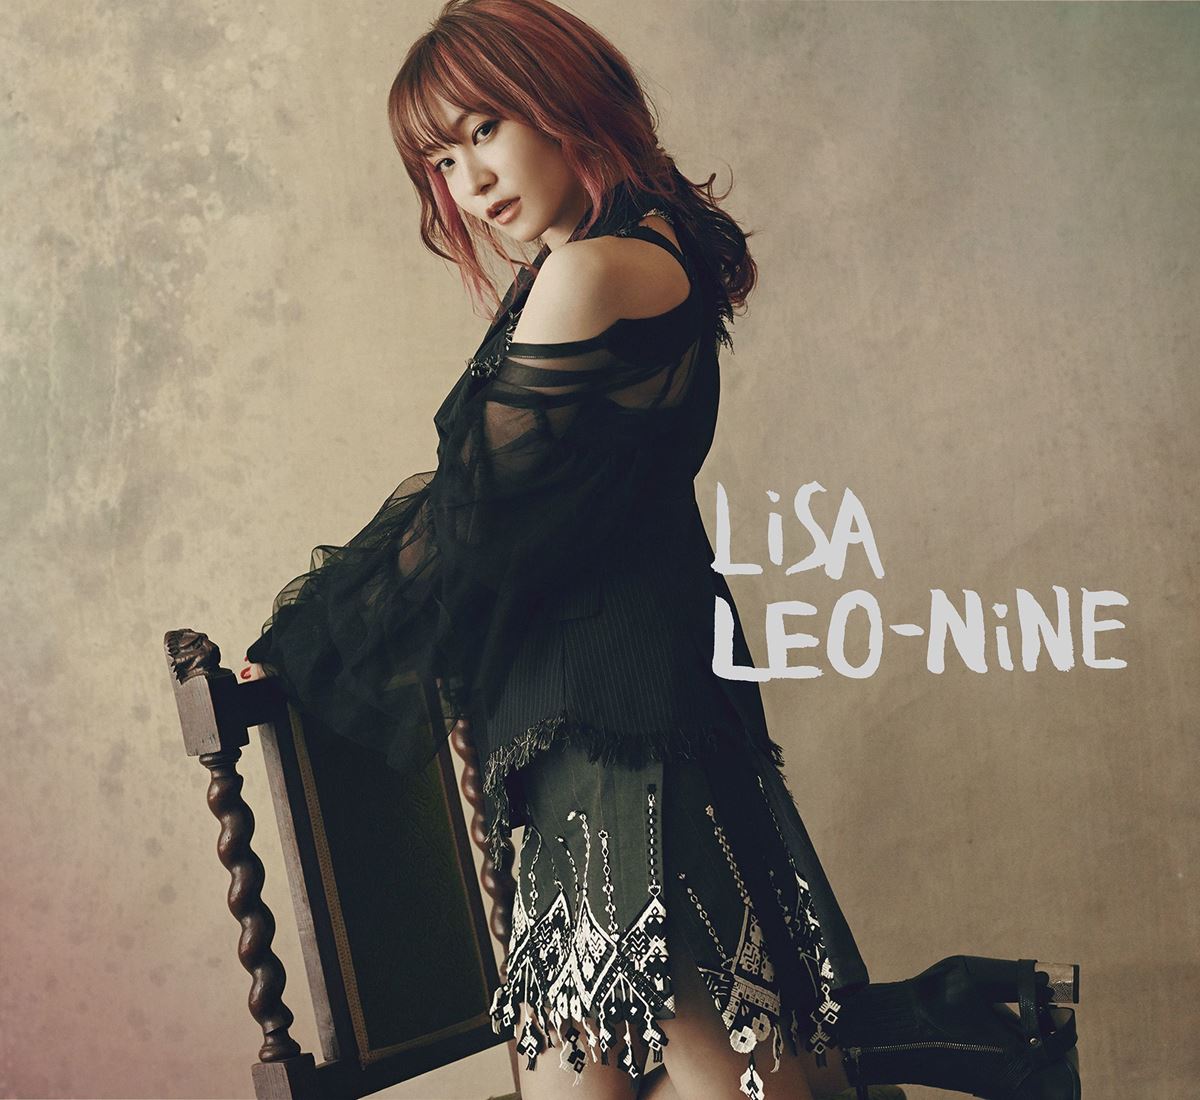 LiSA 5thアルバム『LEO-NiNE』初回生産限定盤A